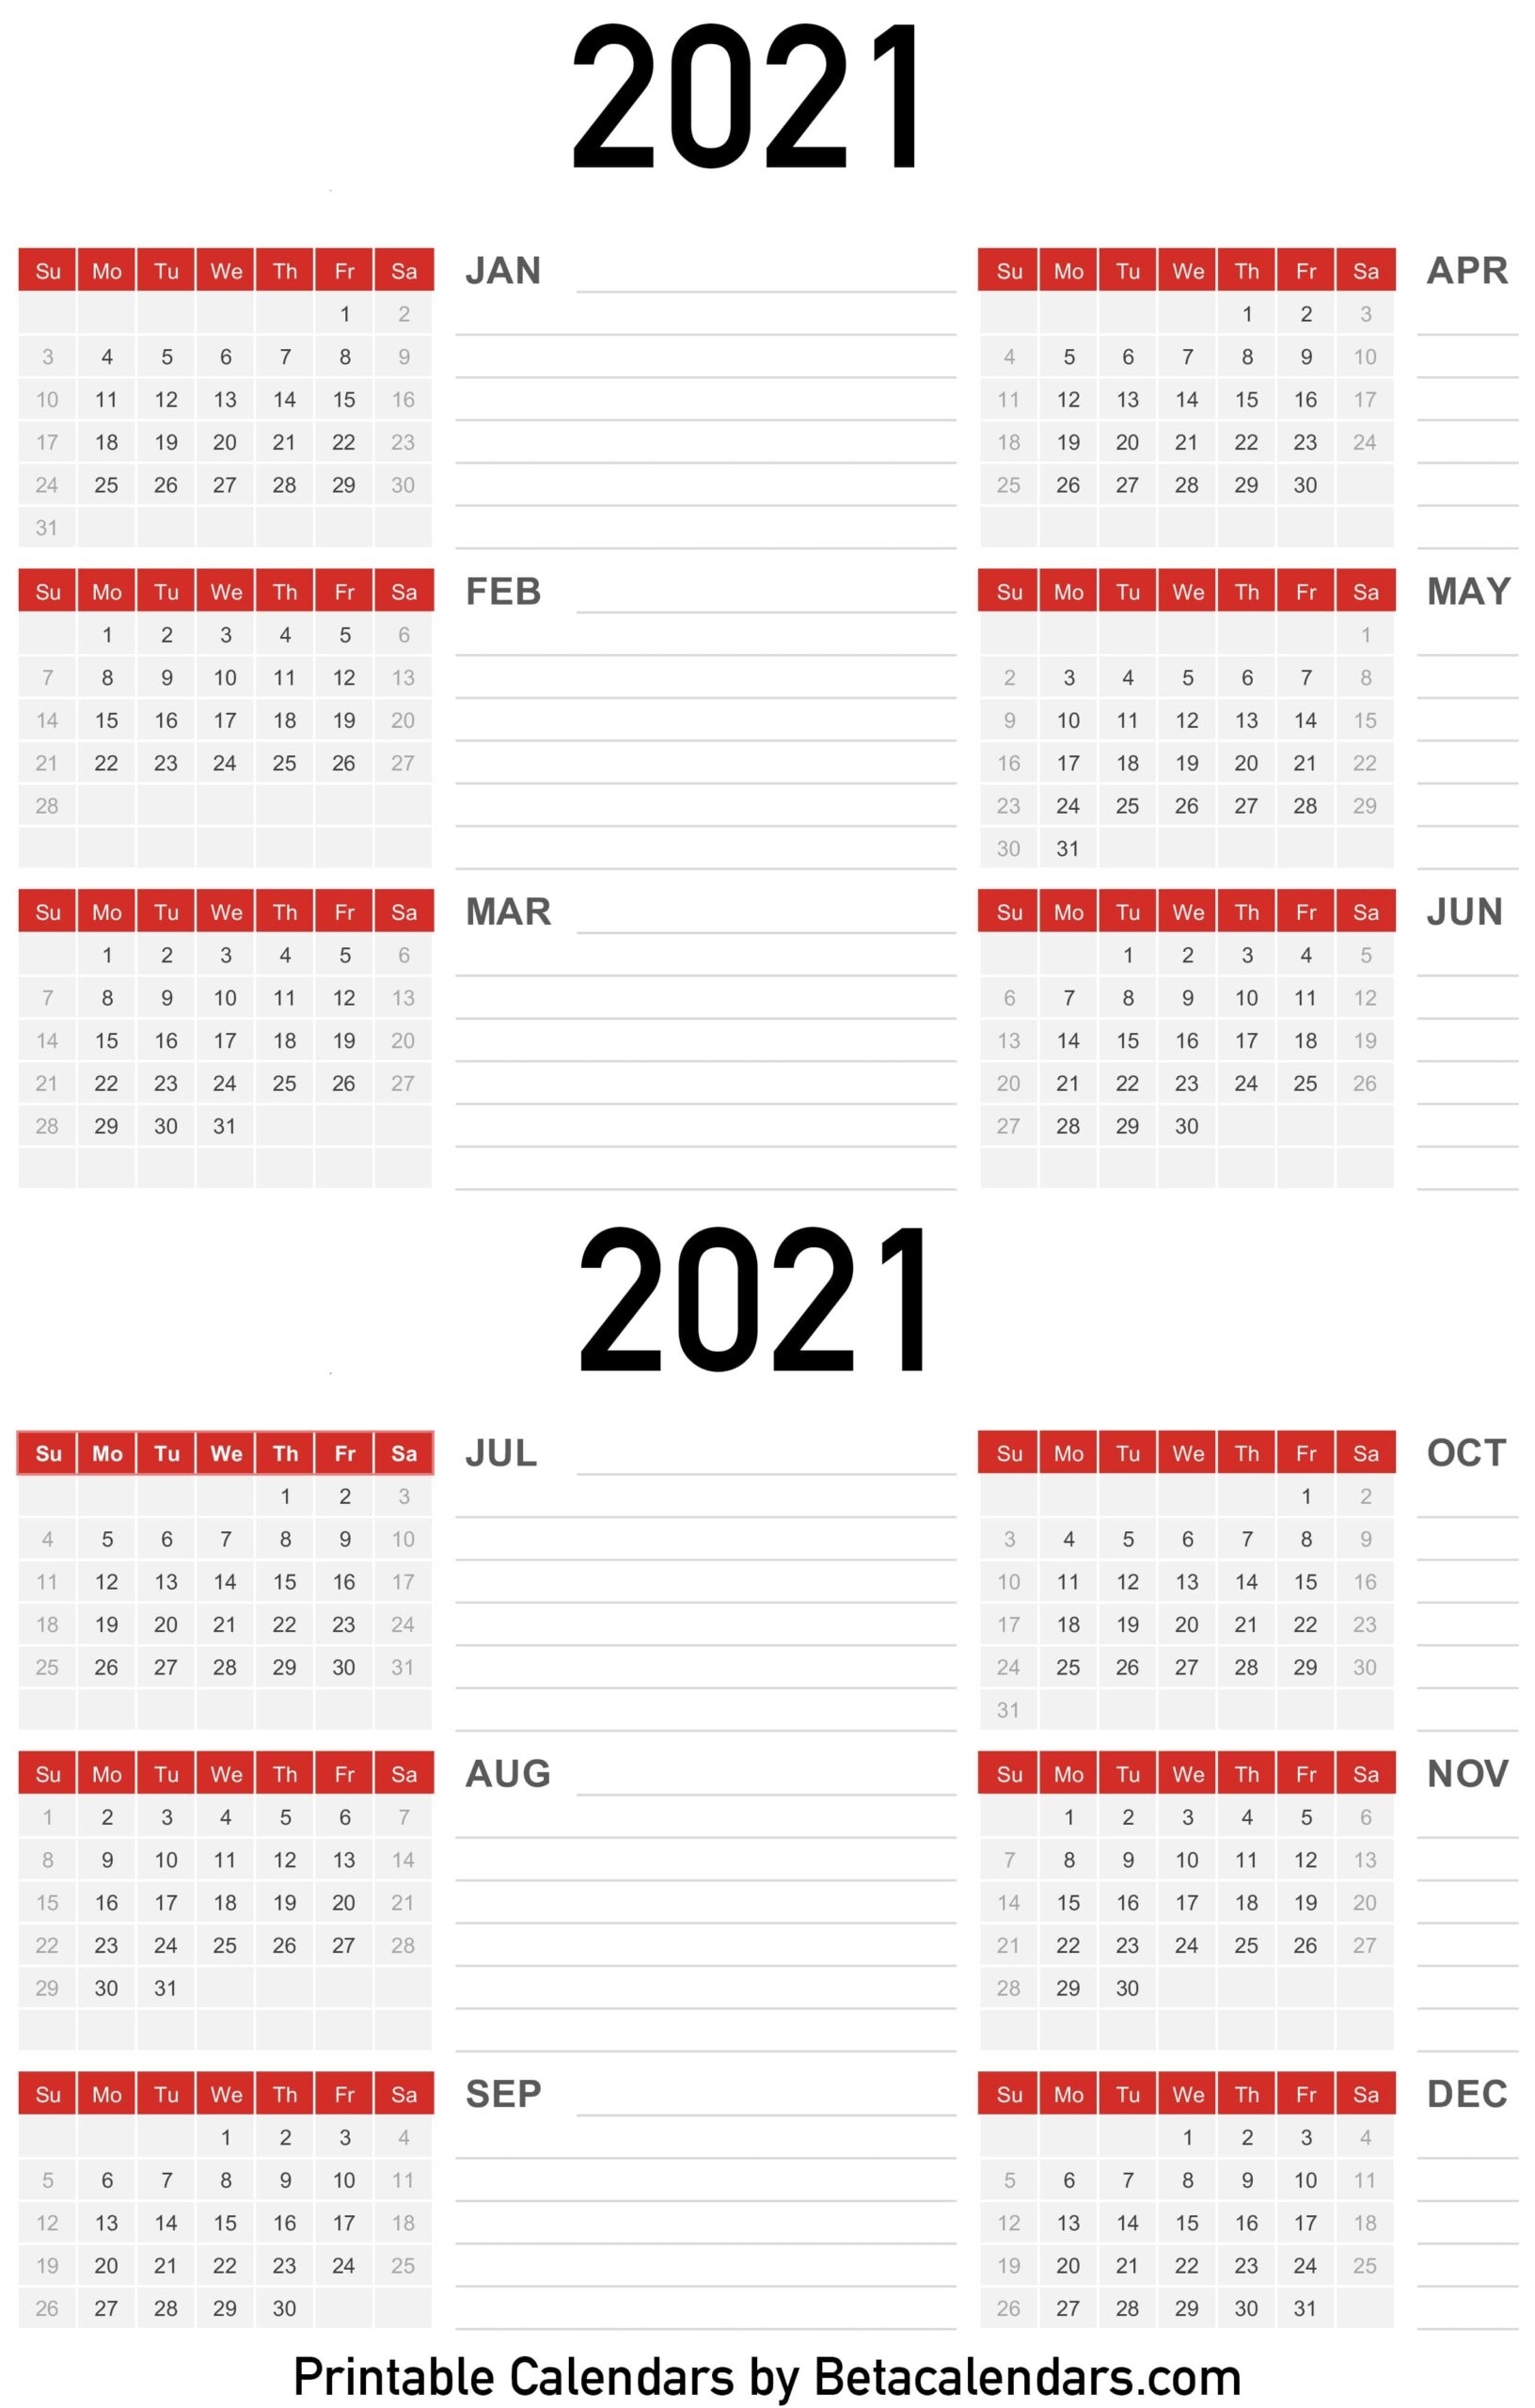 2021 Calendar - Beta Calendars